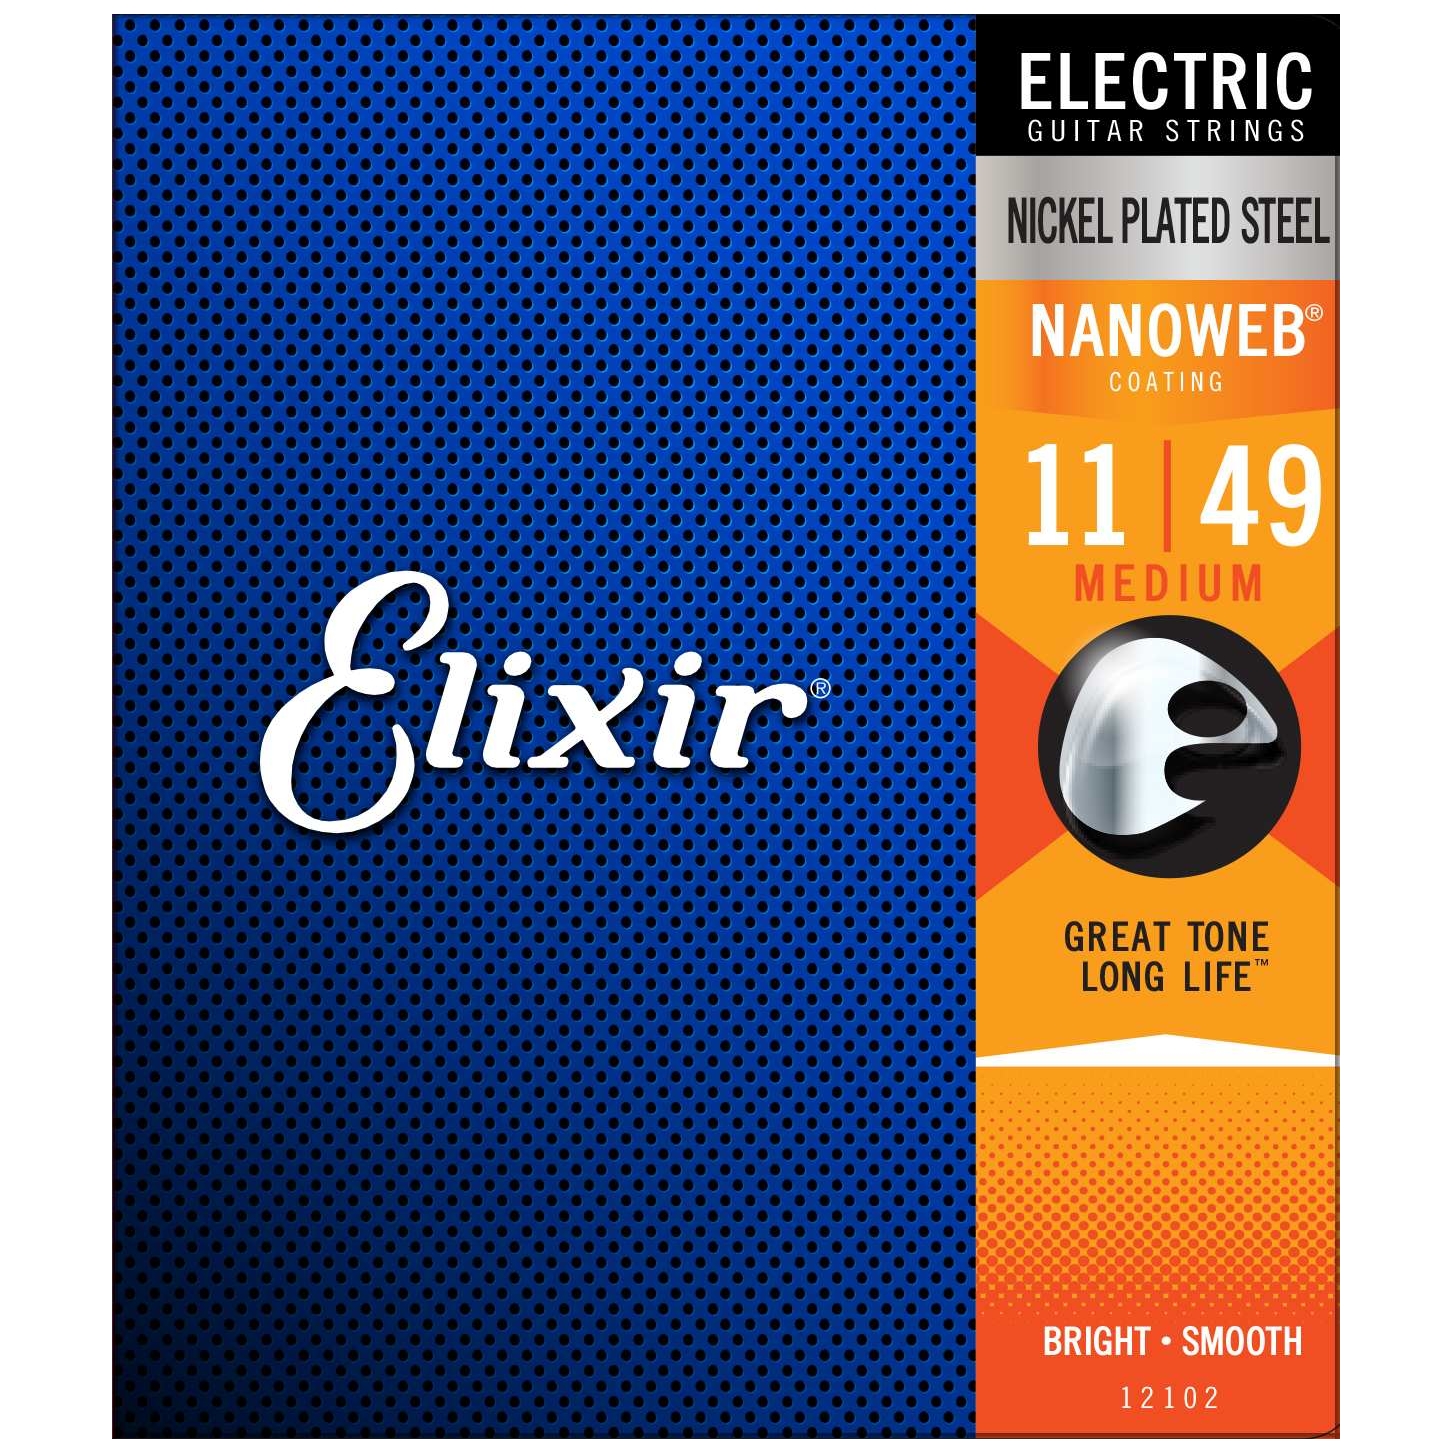 Elixir 12102 Nanoweb Medium | 011-049